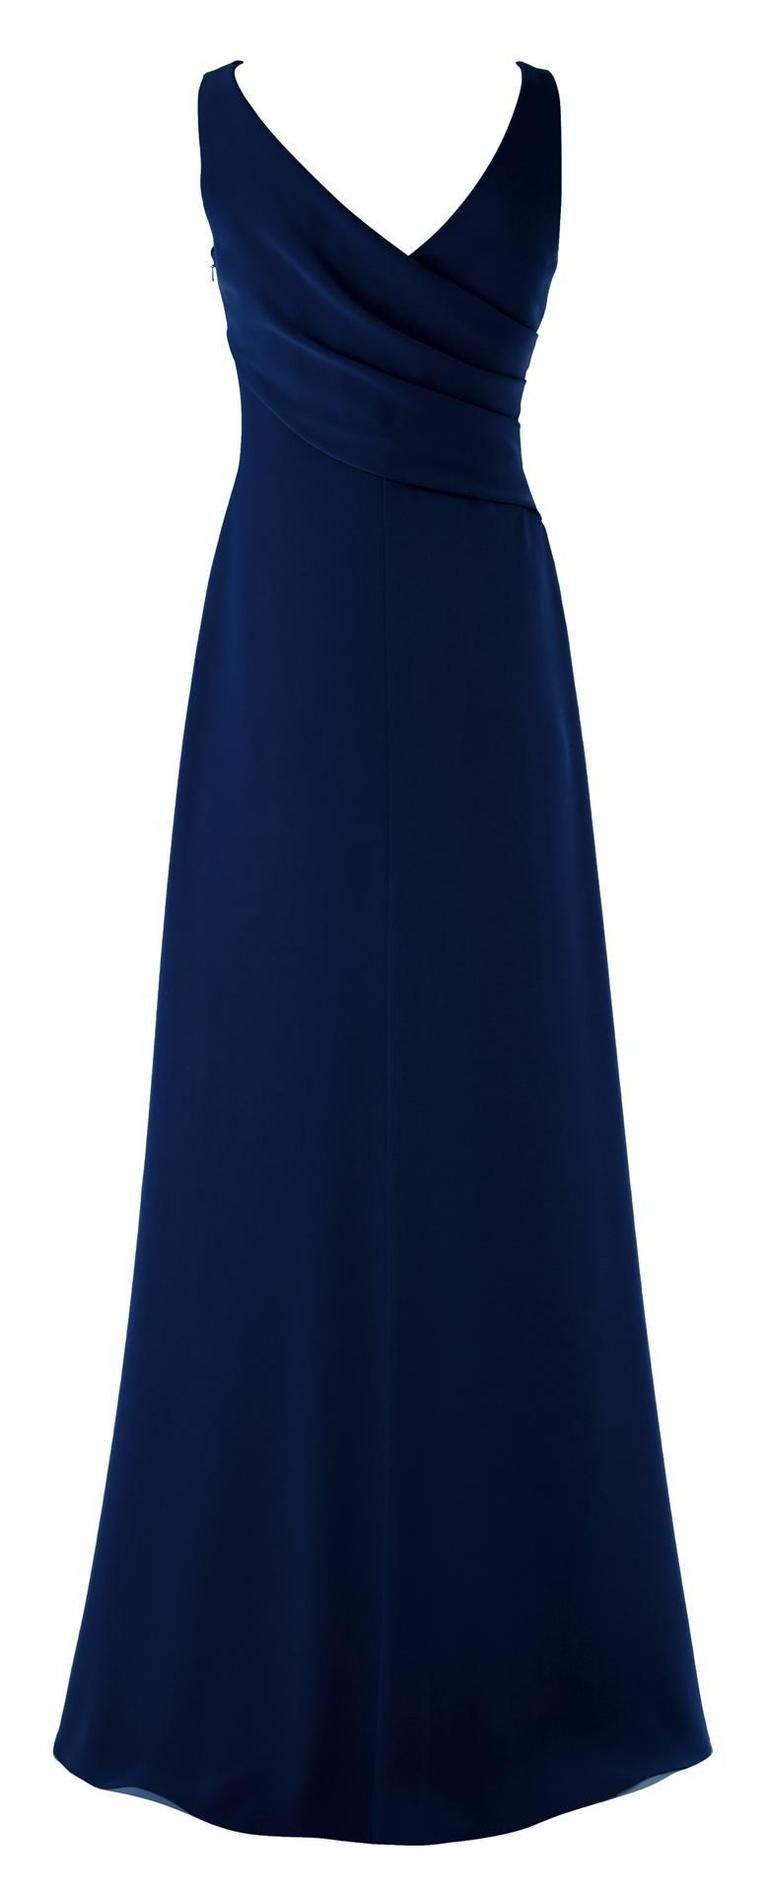 Blue, Dress, One-piece garment, Formal wear, Electric blue, Cobalt blue, Black, Day dress, Gown, Cocktail dress, 